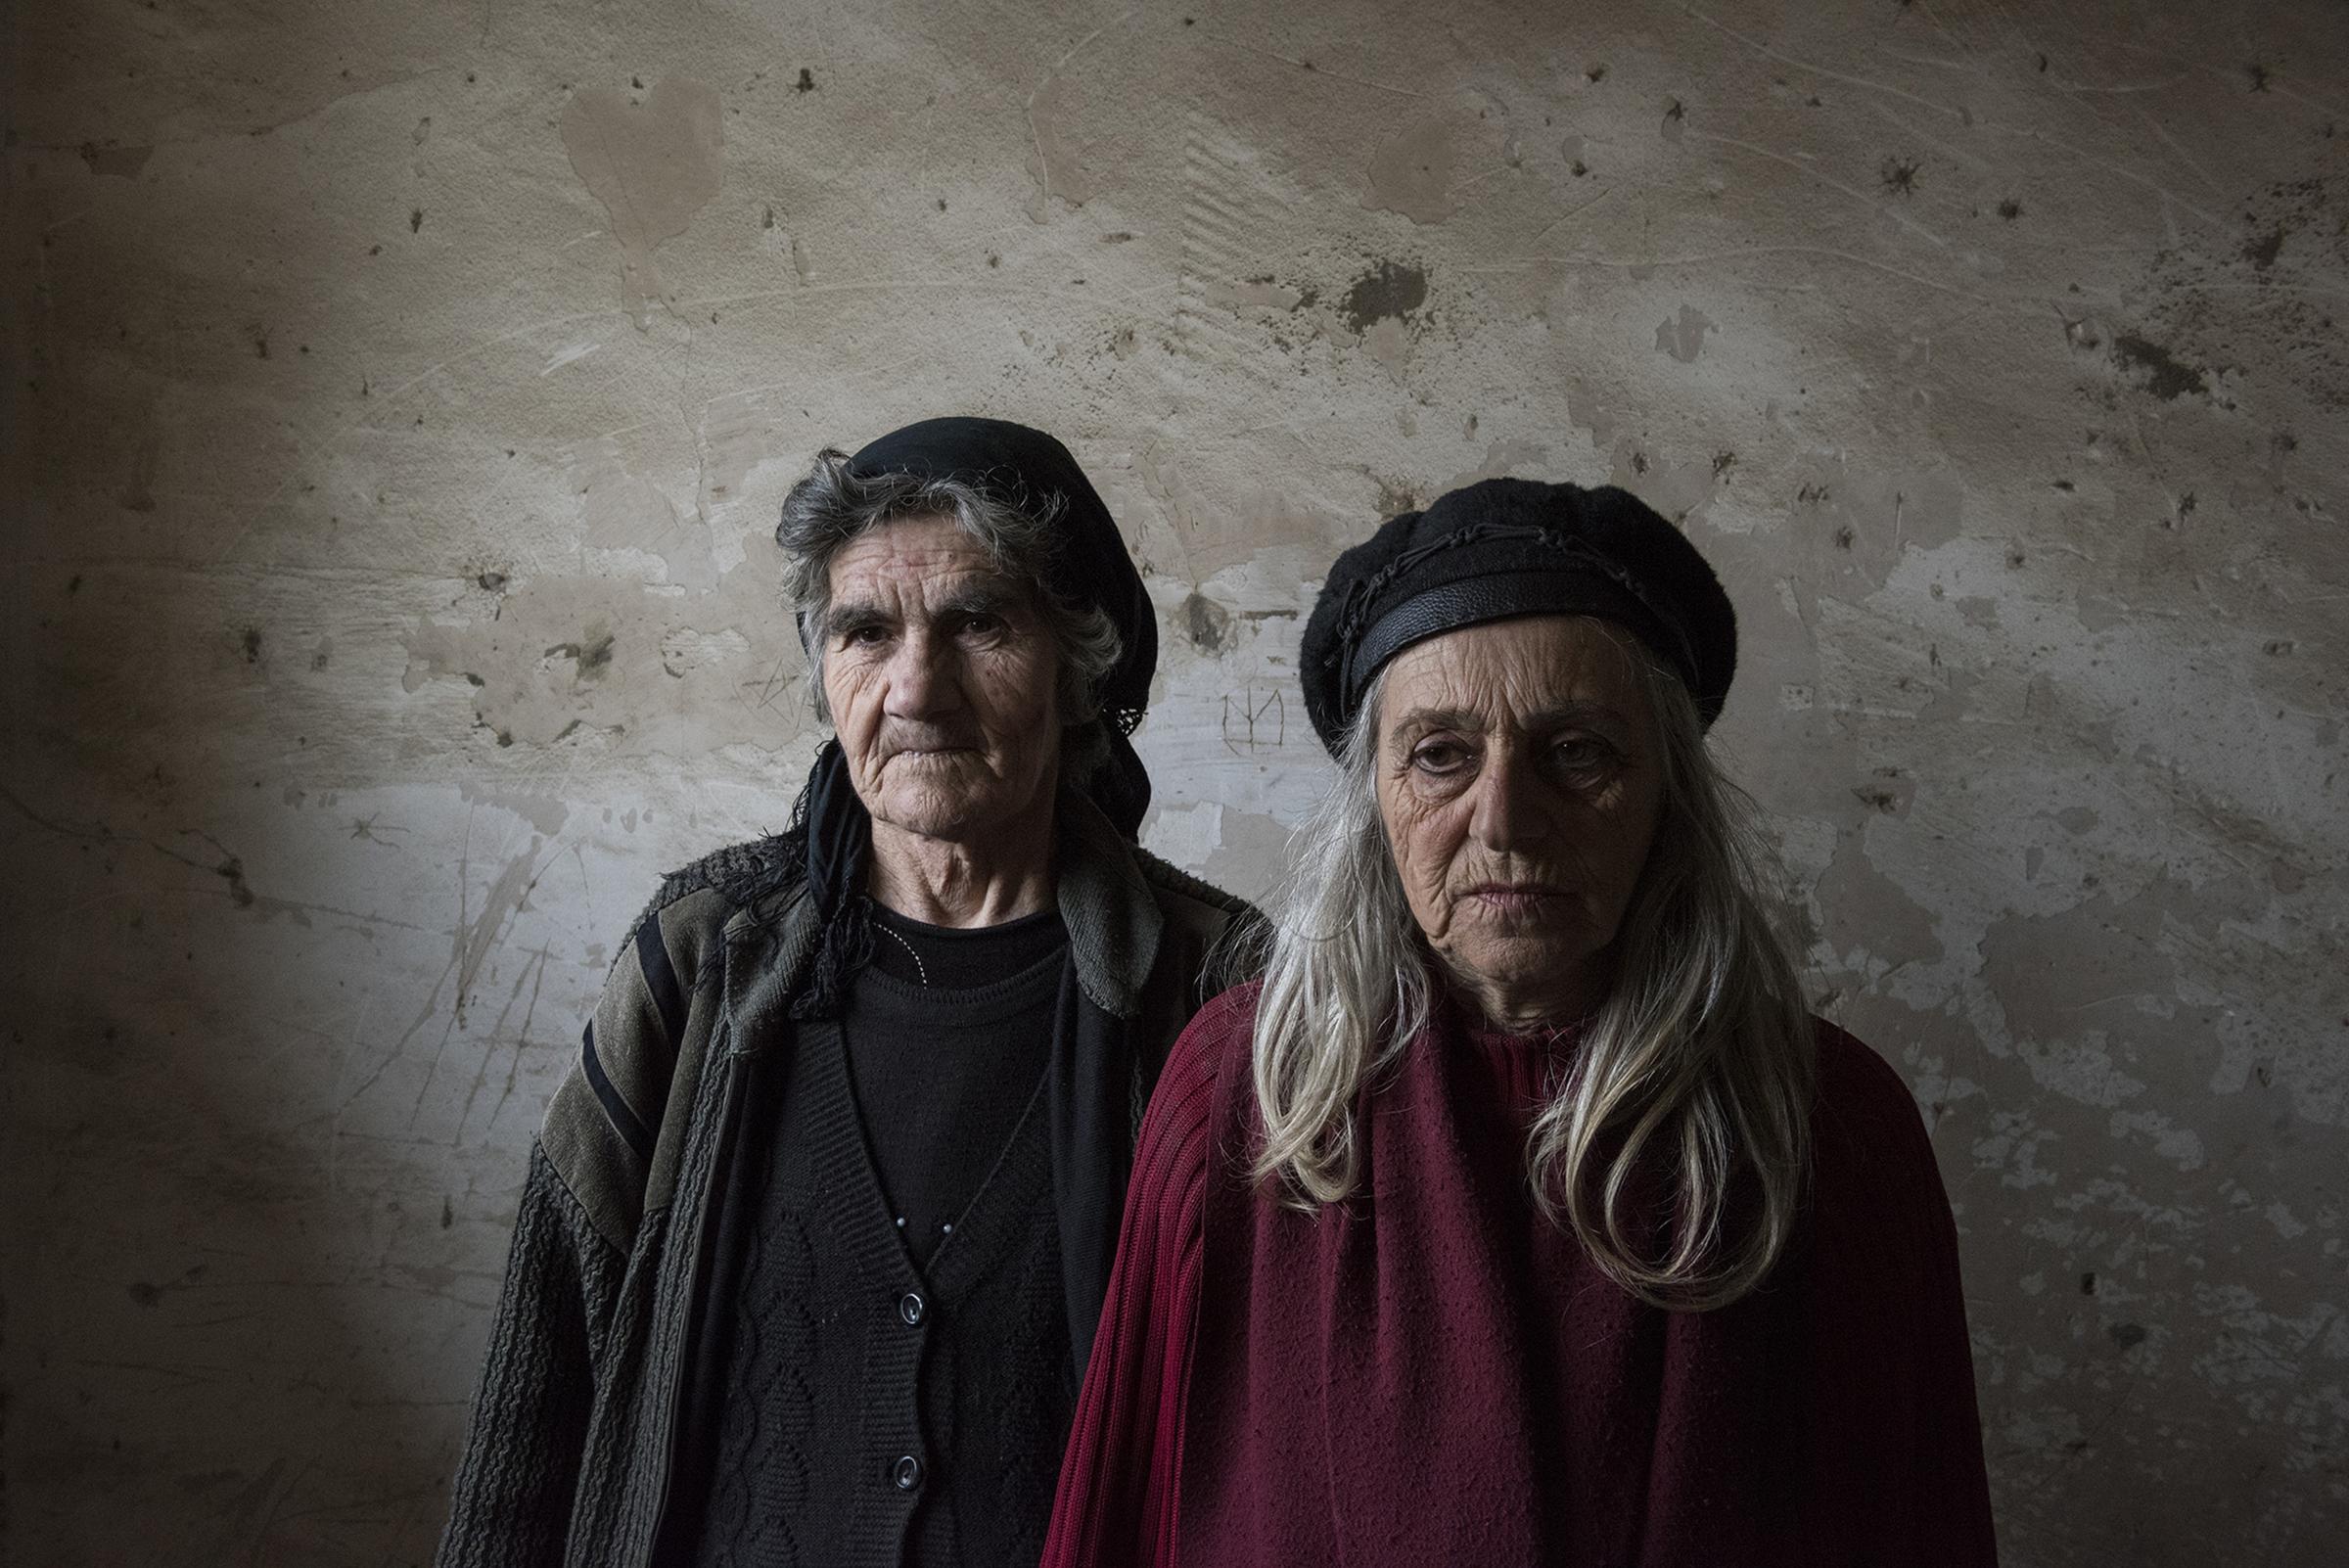 Paradise Lost - Зоя Теванова, 72 и Тамара Саркисян, 56
Беженцы из села Марага
Живут у родственников в городе...